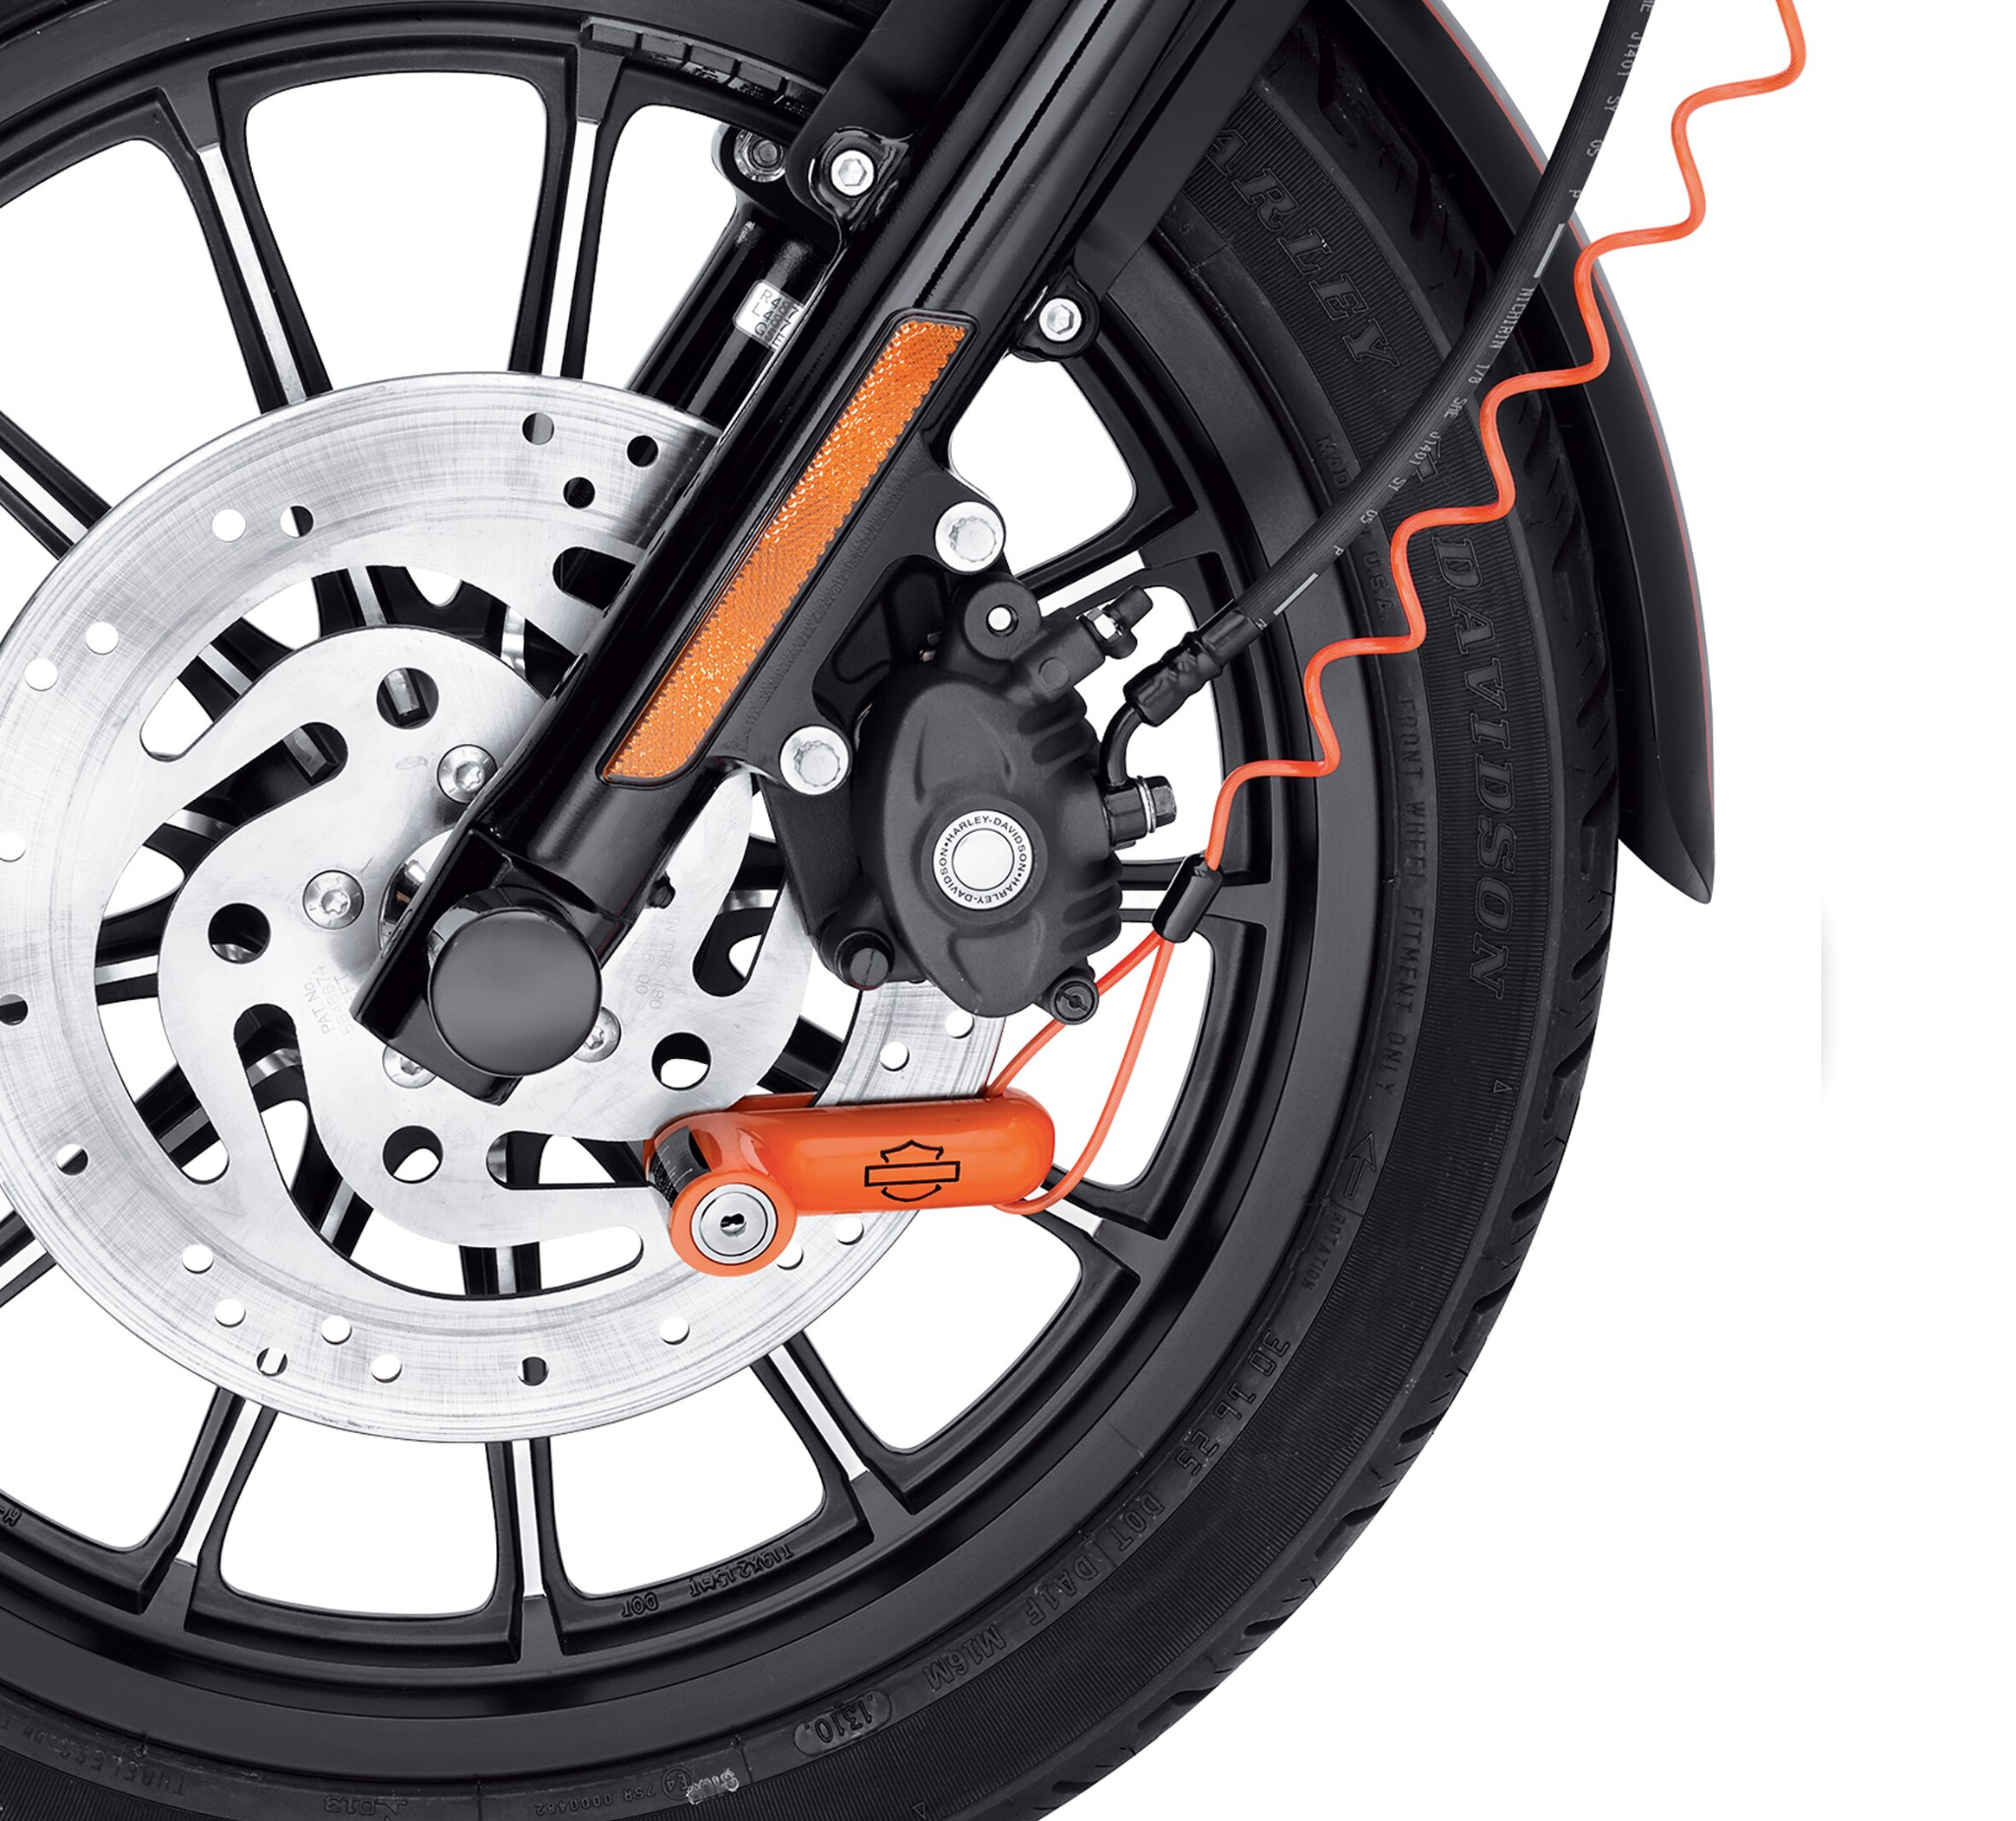 Orange Motorcycle Bike Brake Disc Lock Security Alarm Fit For Honda Harley BMW